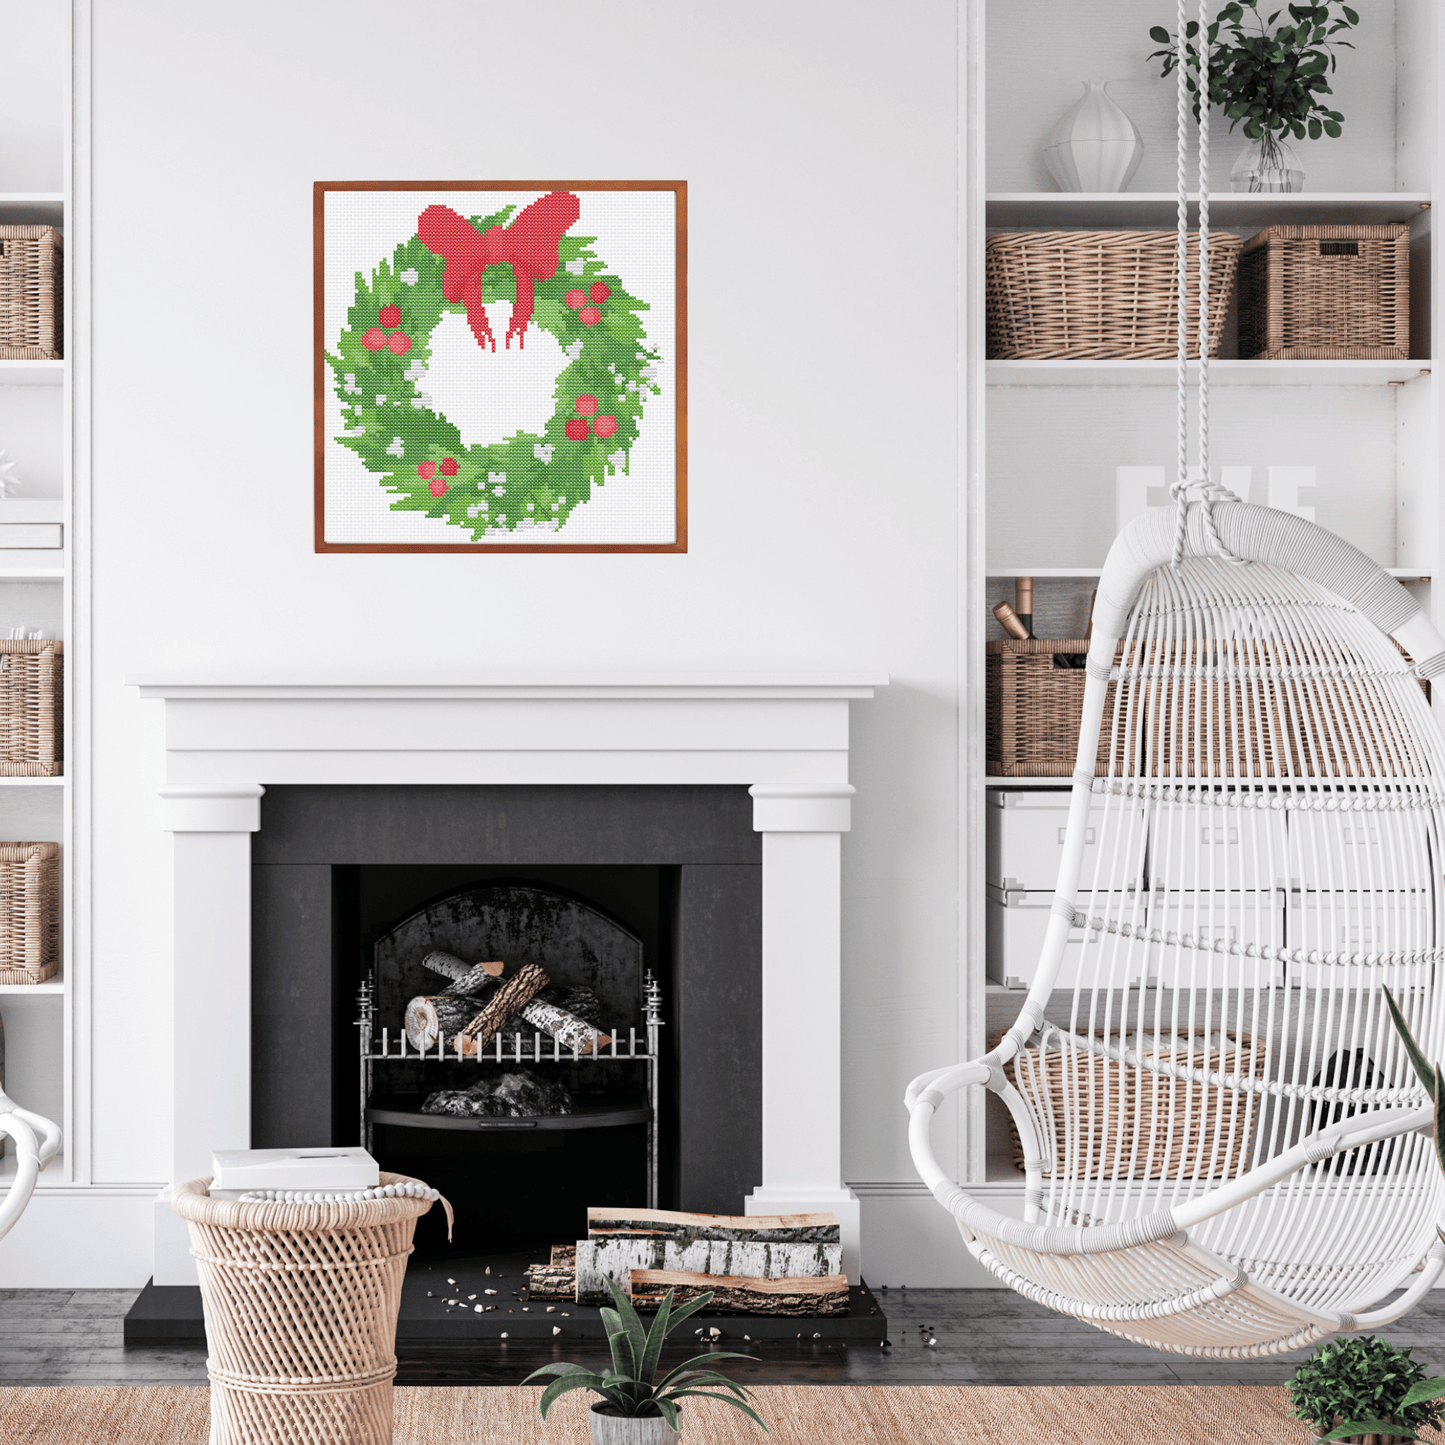 Christmas wreath cross stitch pattern with red bow | Christmas wreath cross stitch chart | Christmas Cross Stitch